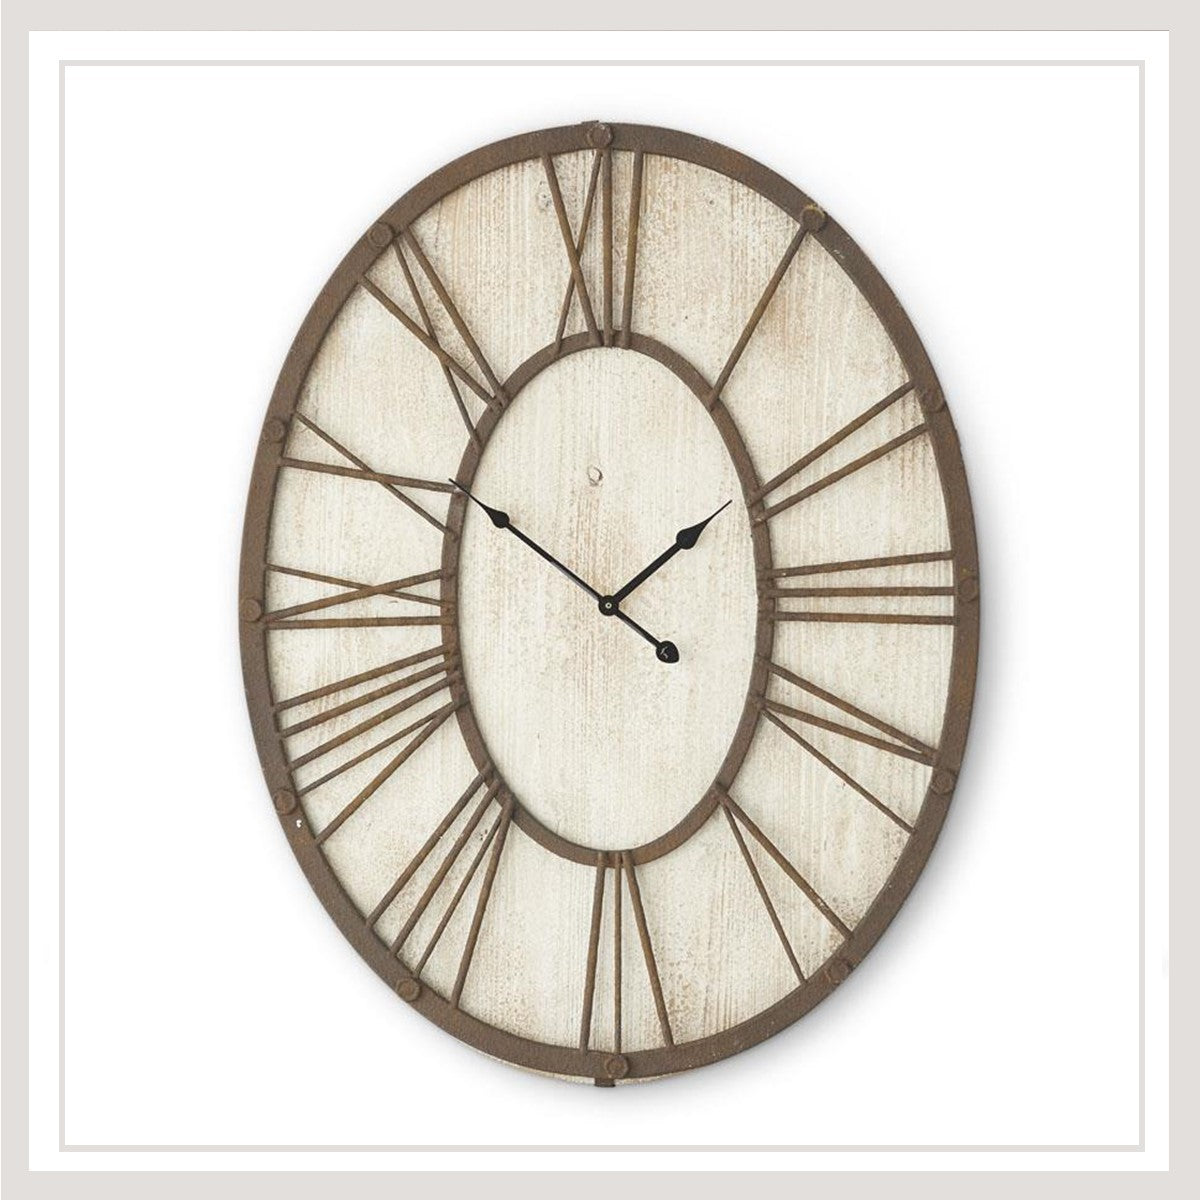 Whitewashed Wood Oval Wall Clock w/Rusty Metal Roman Numerals